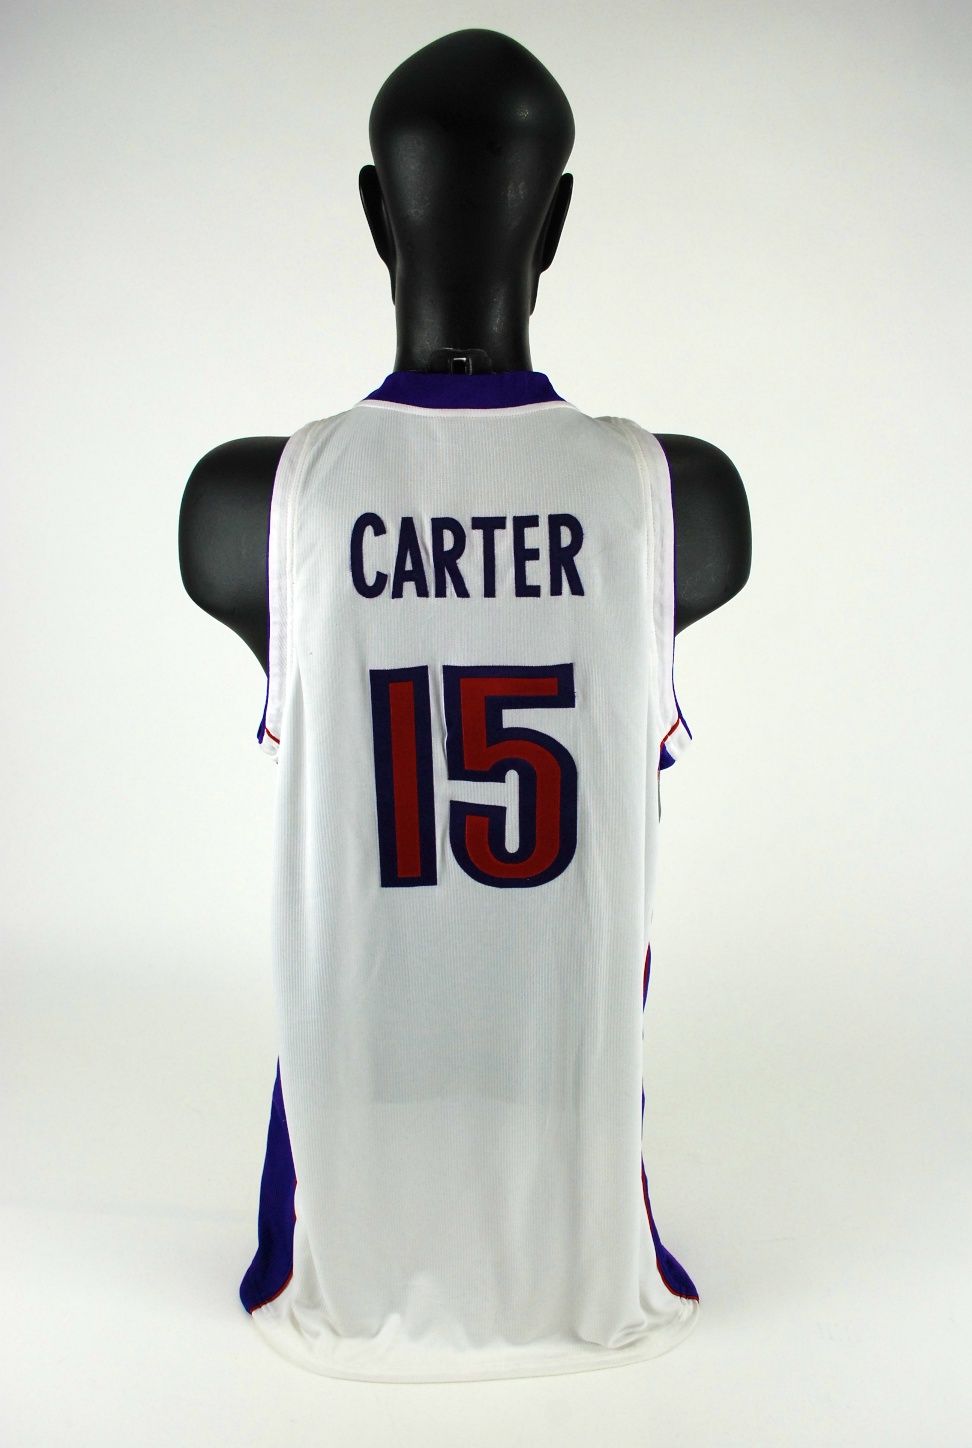 Vince Carter Signed Authentic Nike Toronto Raptors Jersey With JSA